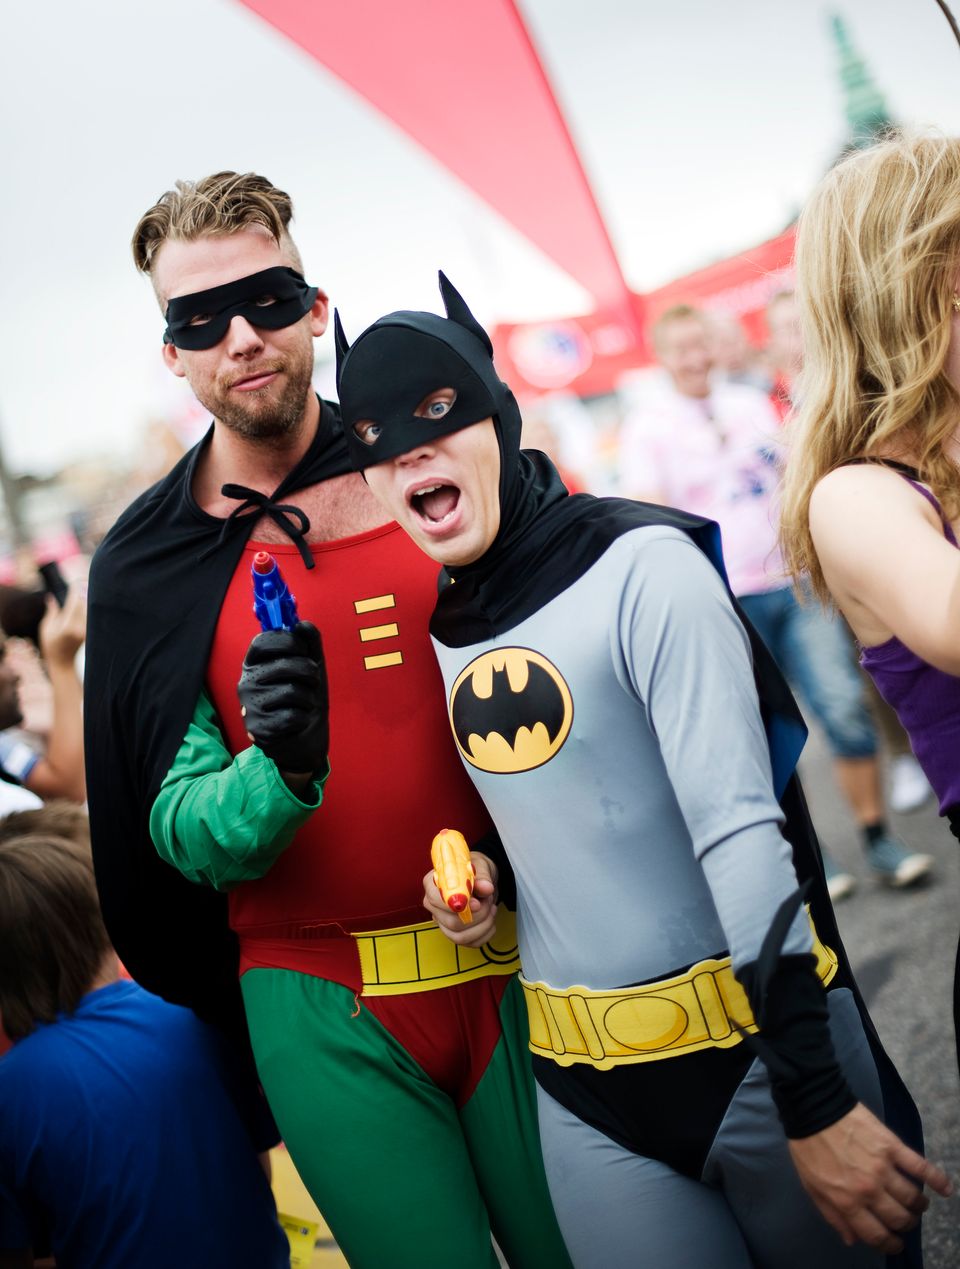 batman and robin couple costumes